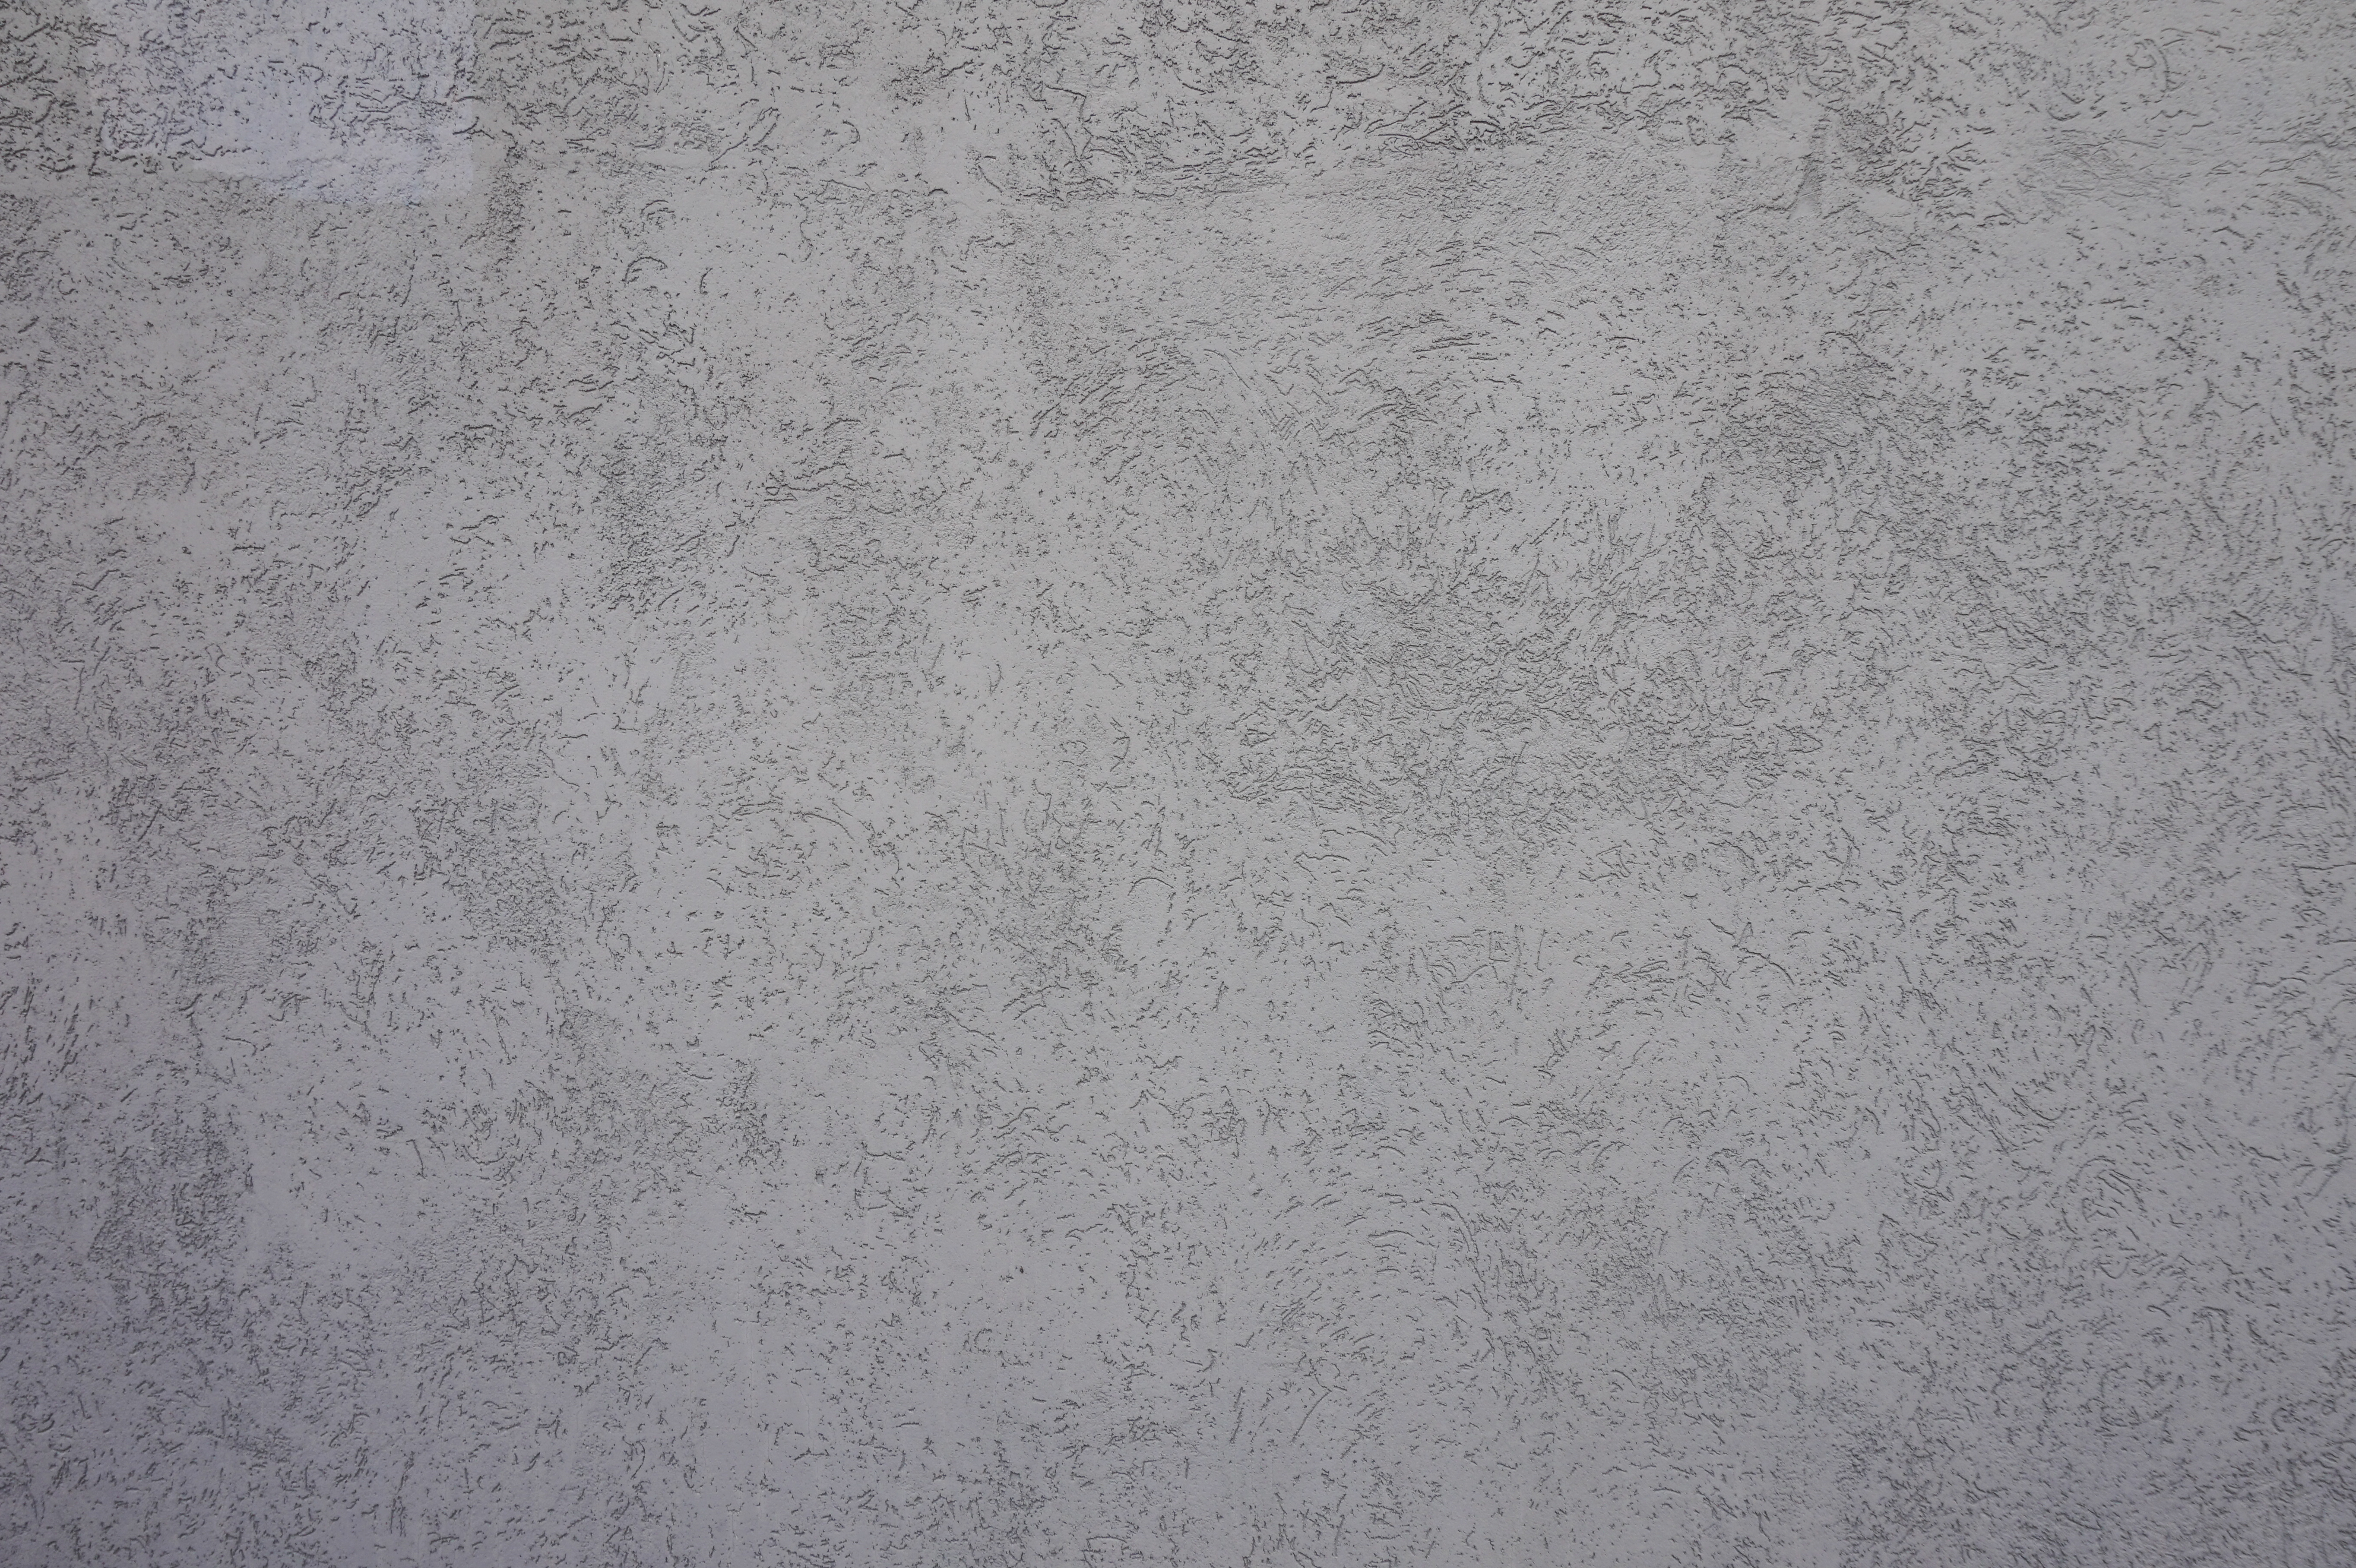 Procedural Concrete Texture - Materials and Textures - Blender Artists